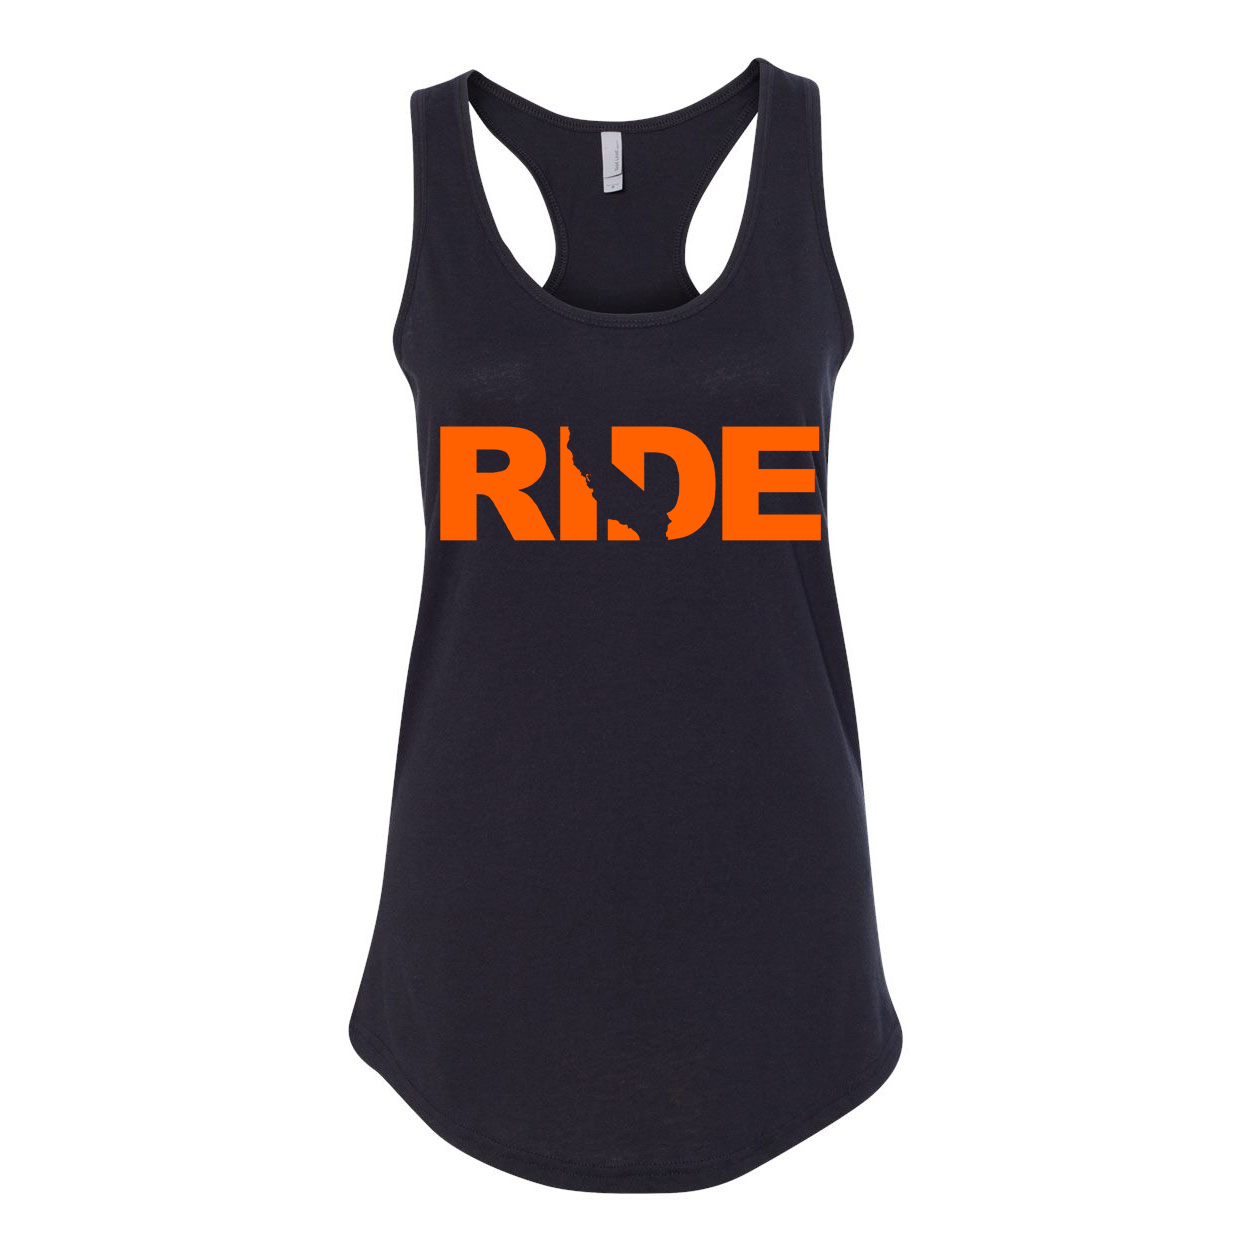 Ride California Classic Women's Racerback Tank Top Black (Orange Logo)